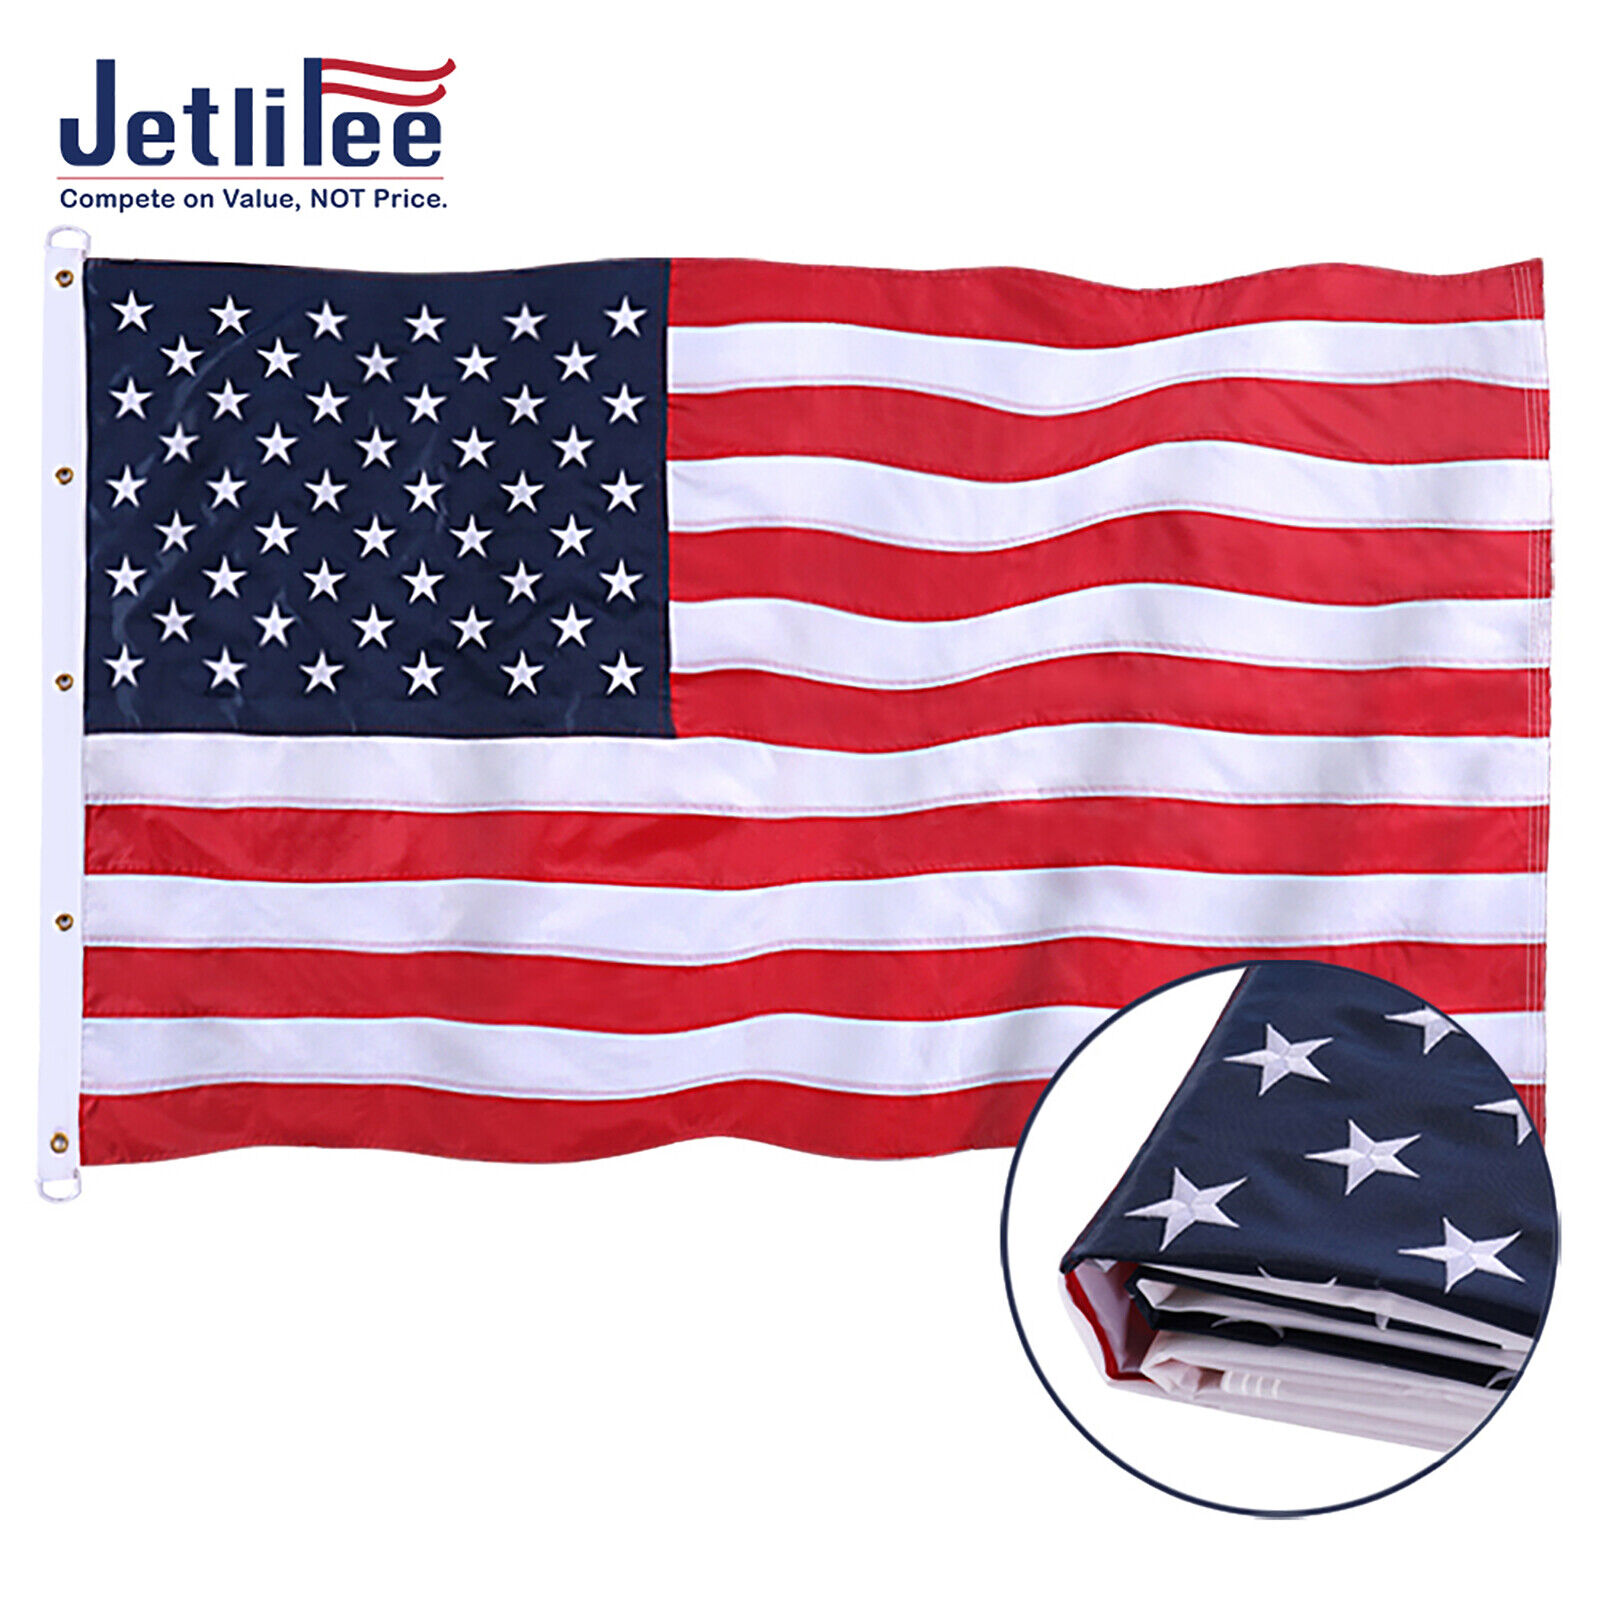 Jetlifee Large American Flag 10x15 ft 210D UV Protected Embroidered US USA Flag